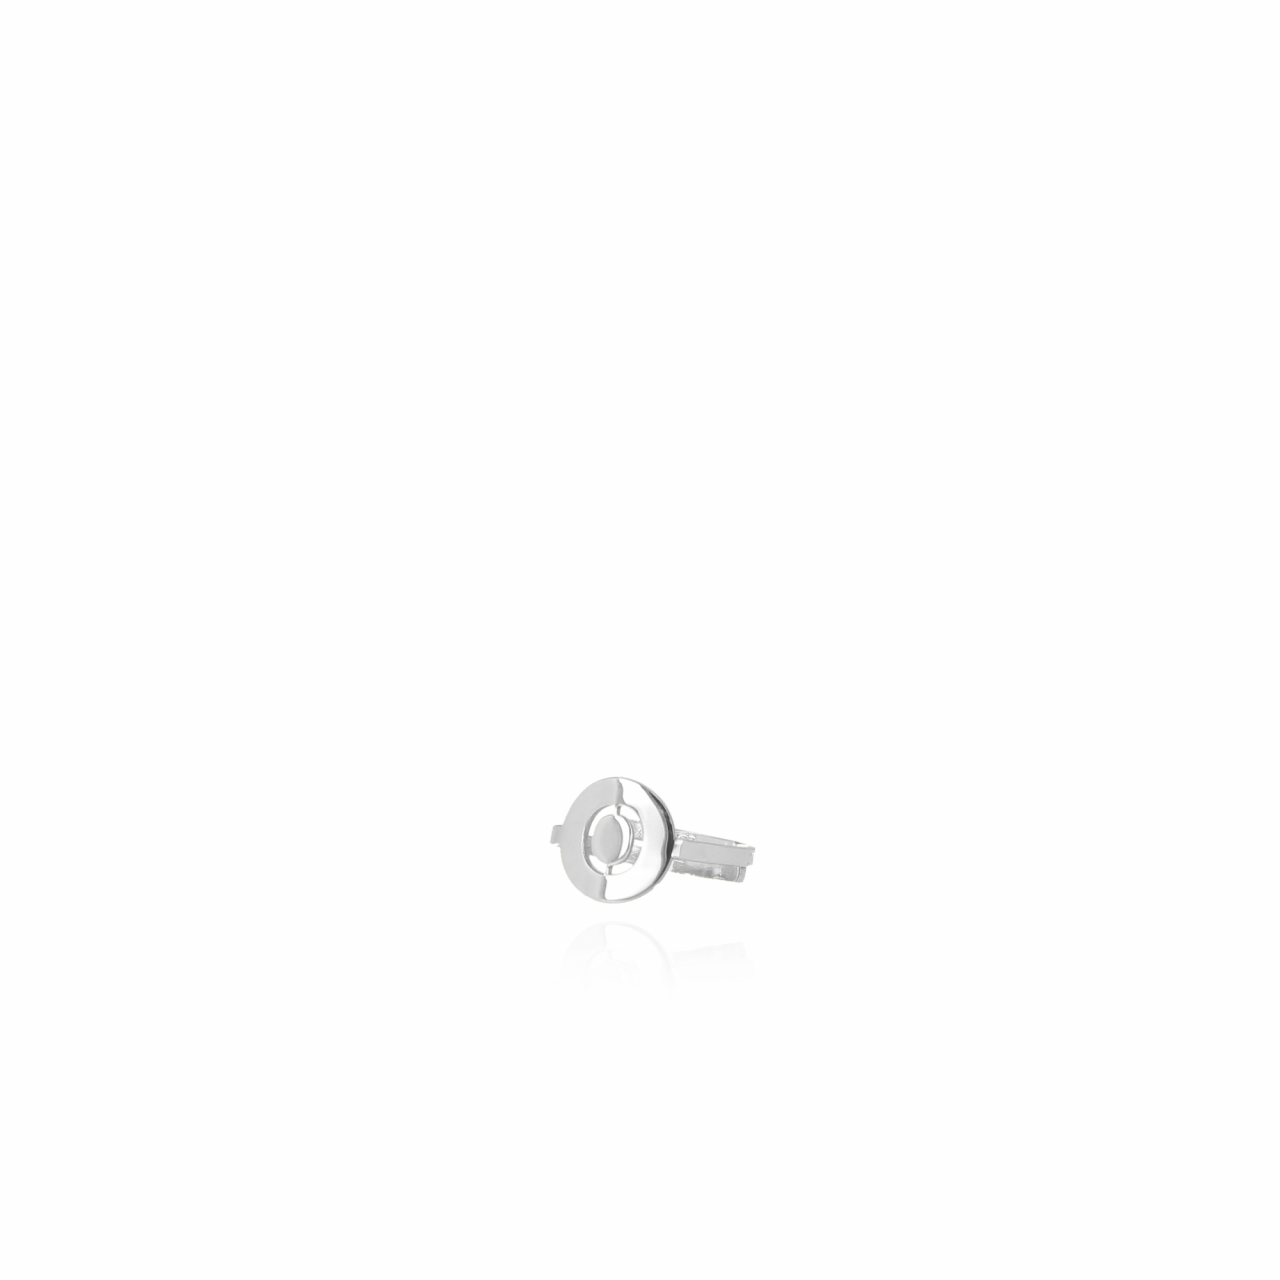 Zilveren ring Initial Largelott-theme.productDescriptionPage.SEO.byTheBrand